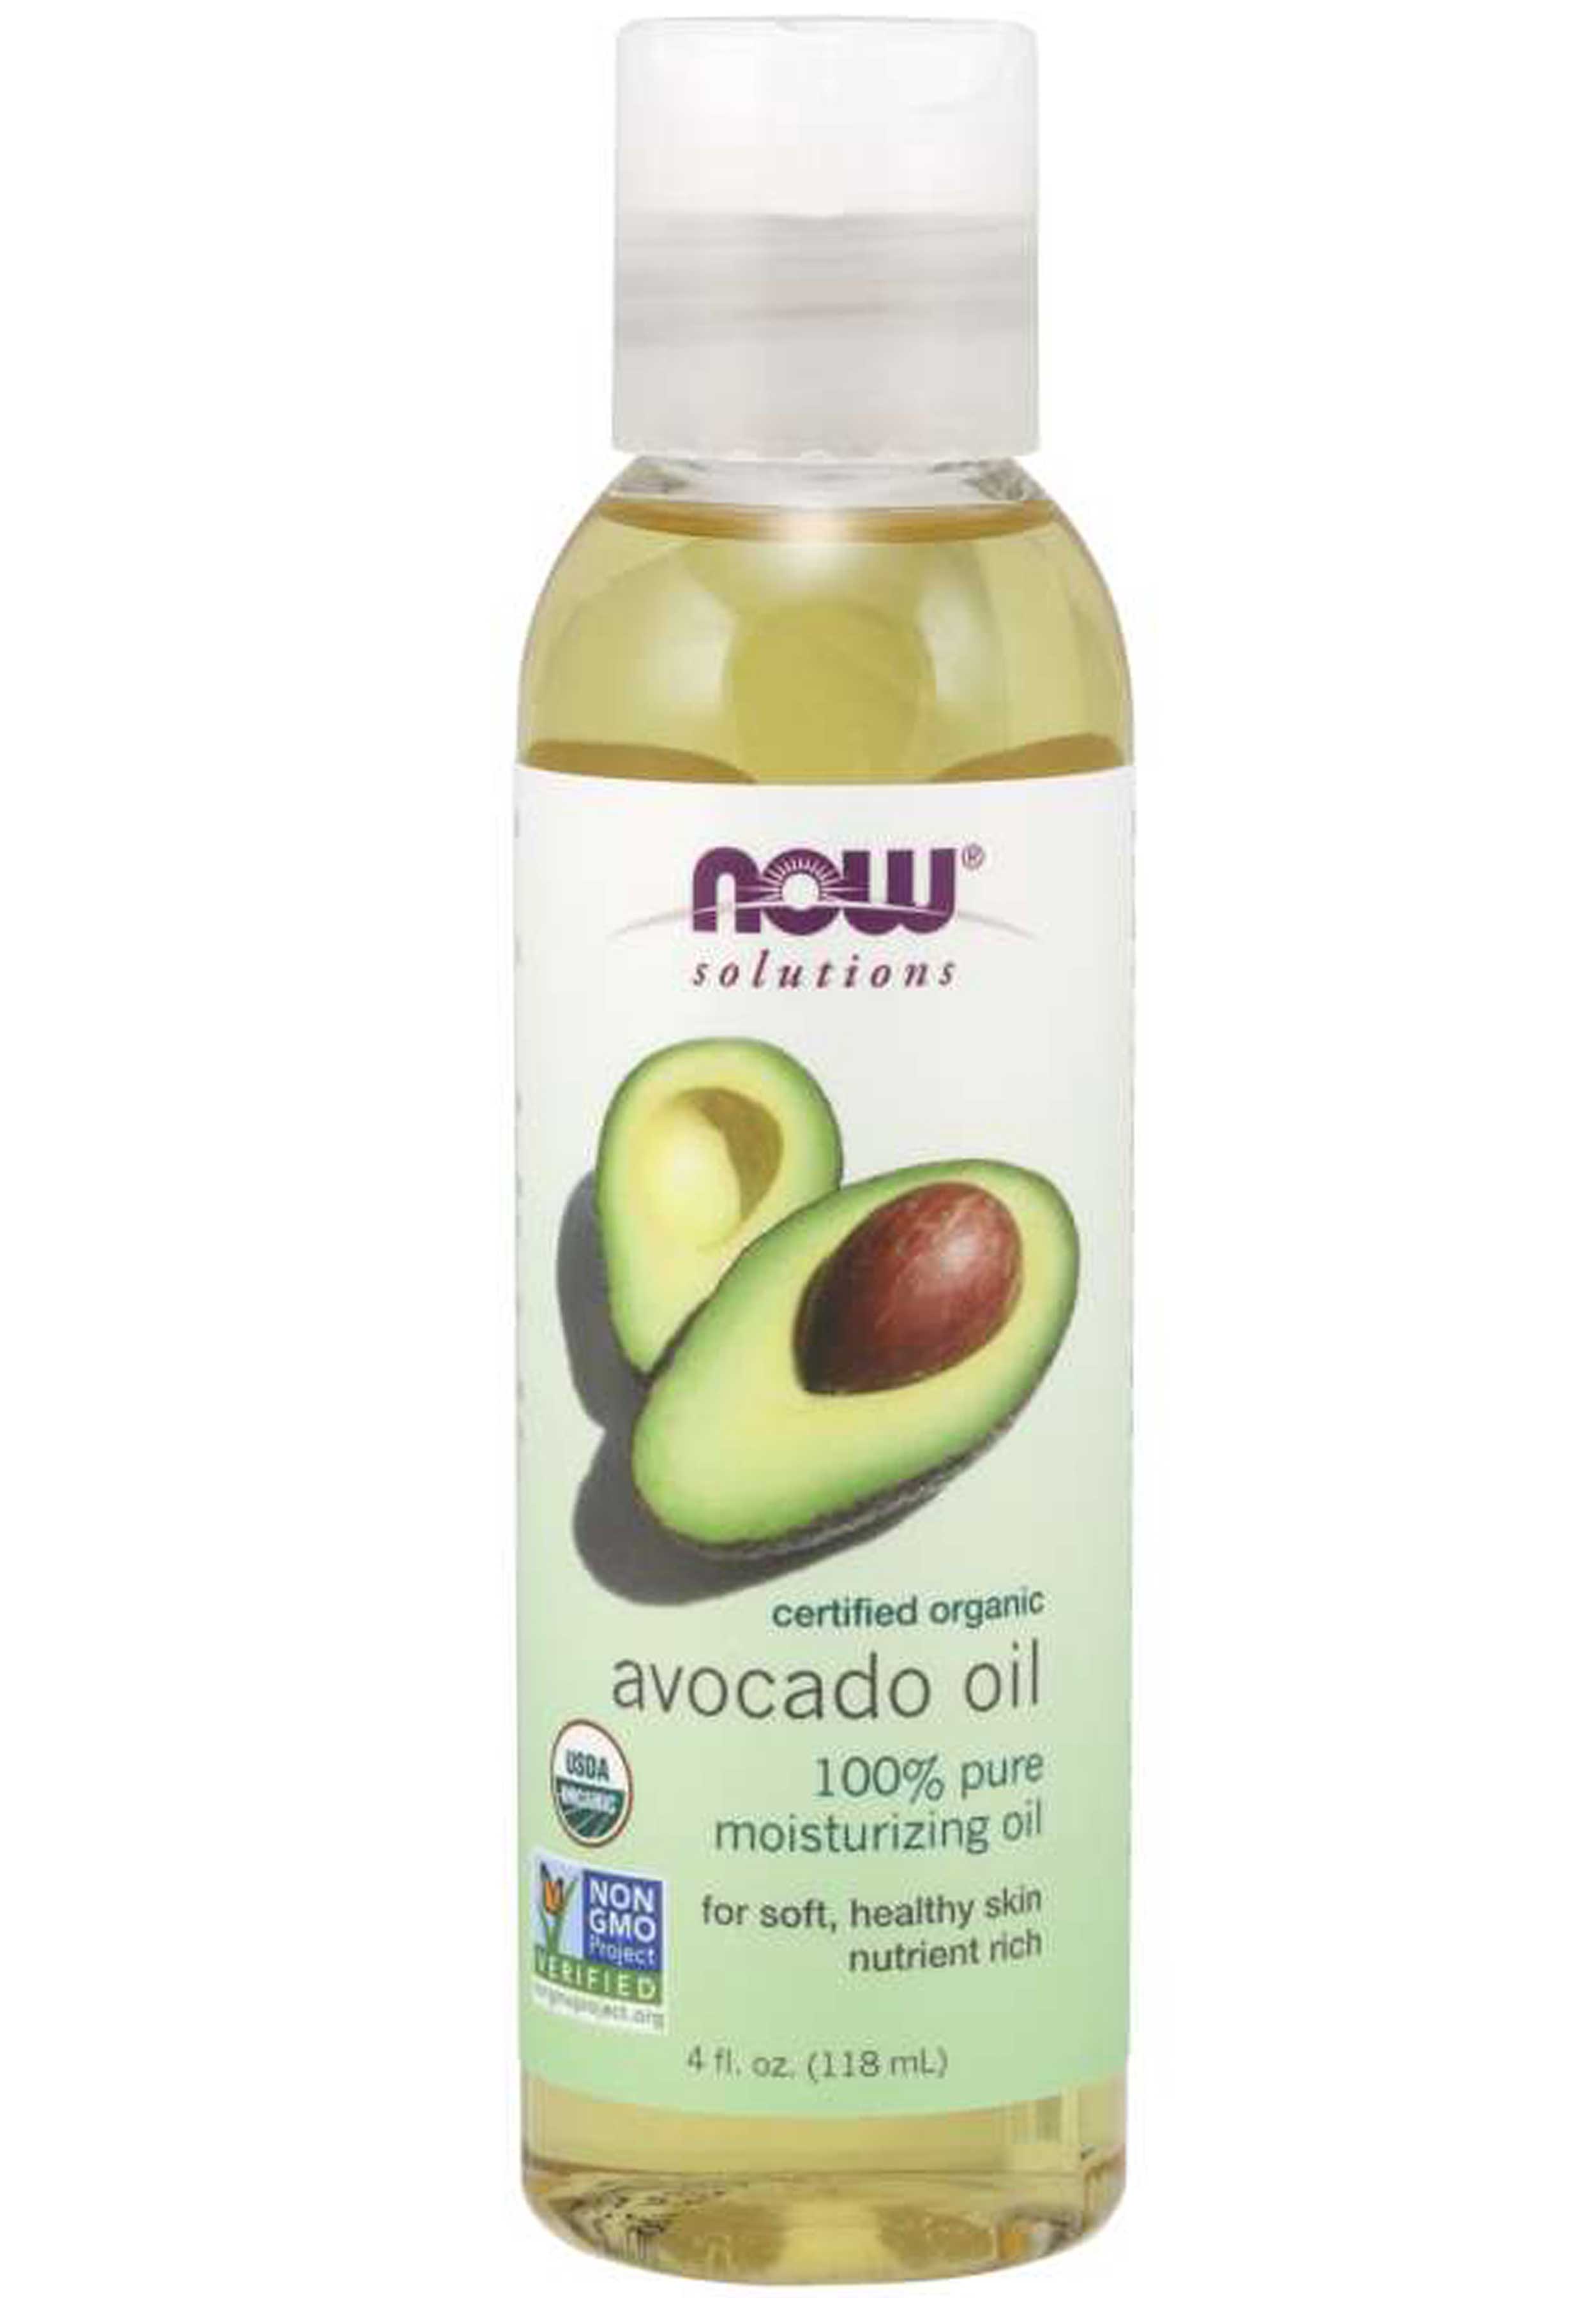 NOW Solutions Avocado Oil, Organic